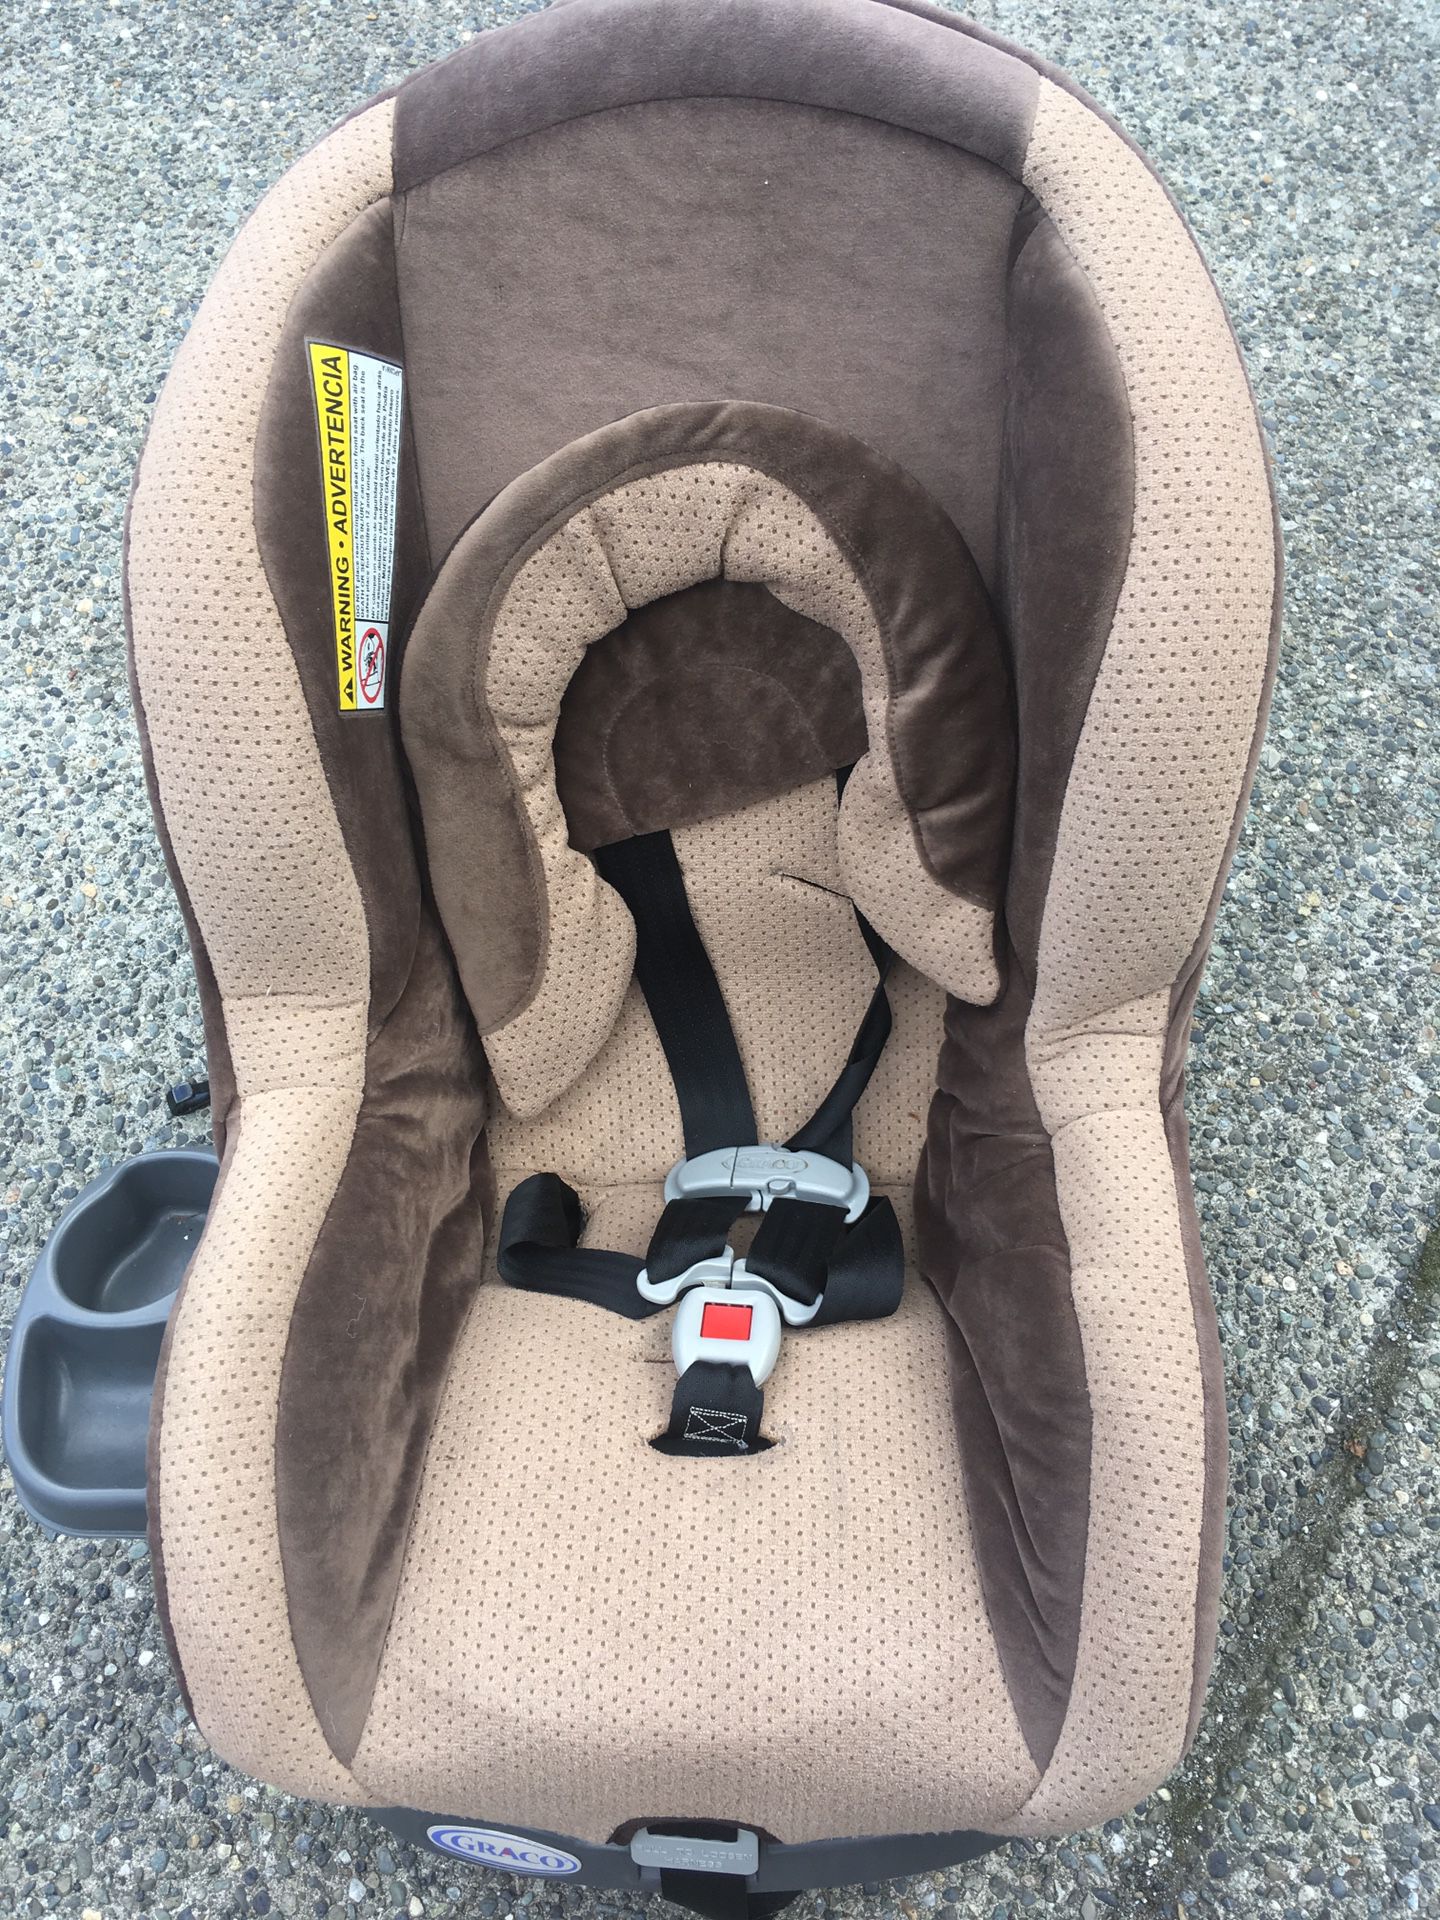 Car seat - New born